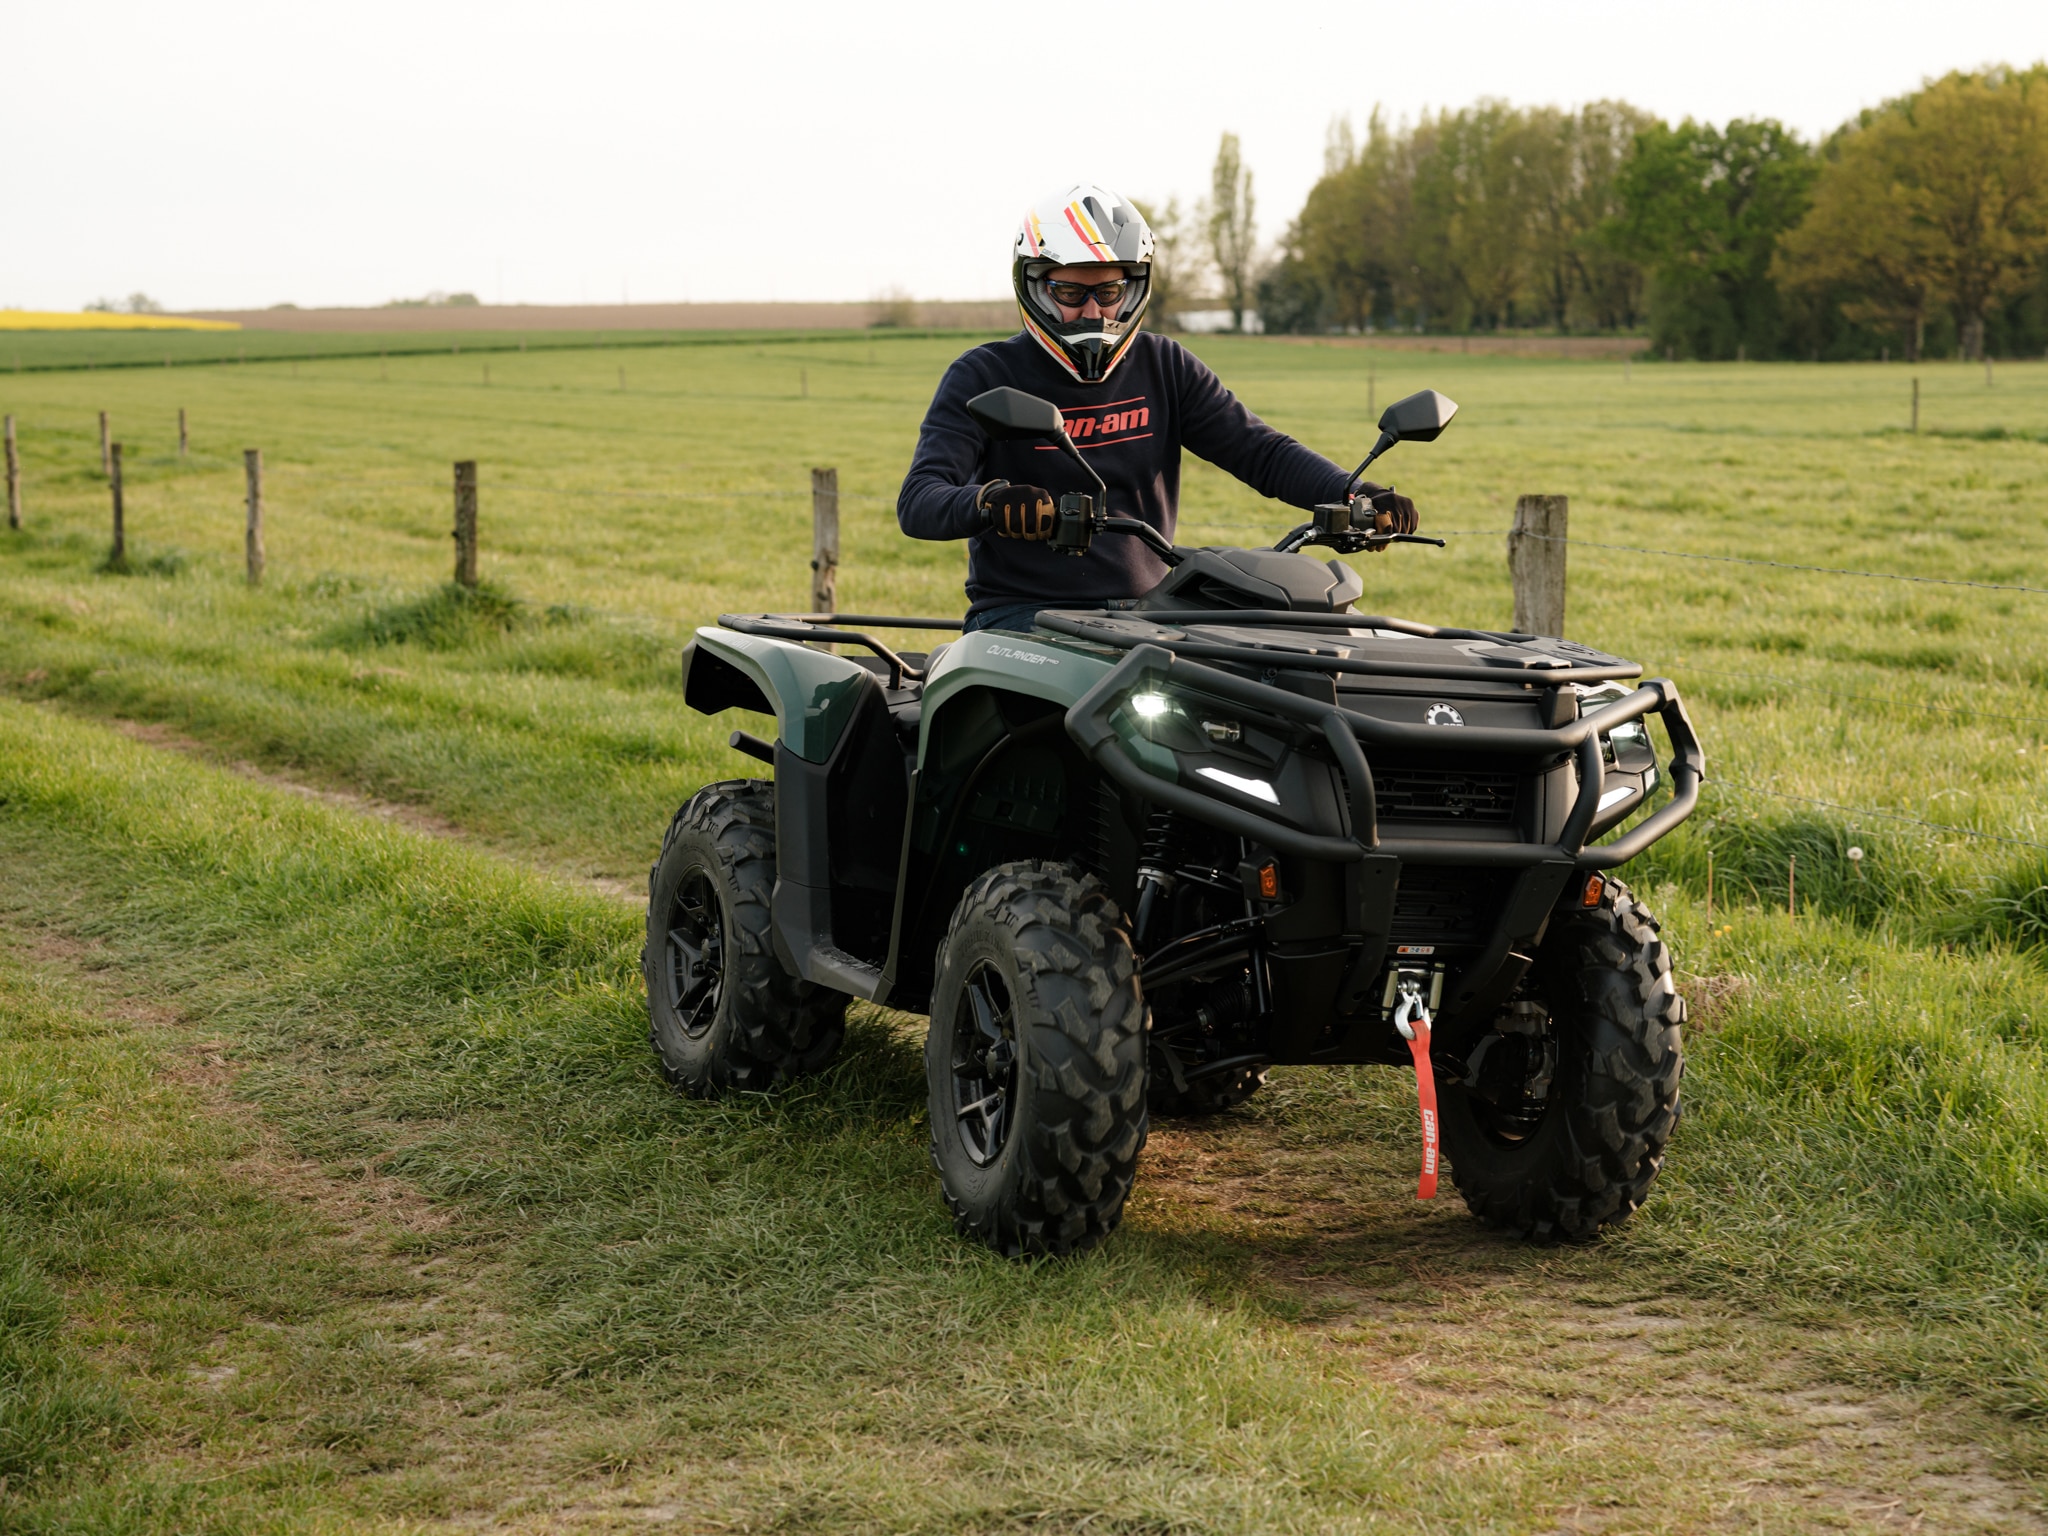 Fahrer fährt Can-Am ATV auf Feldweg